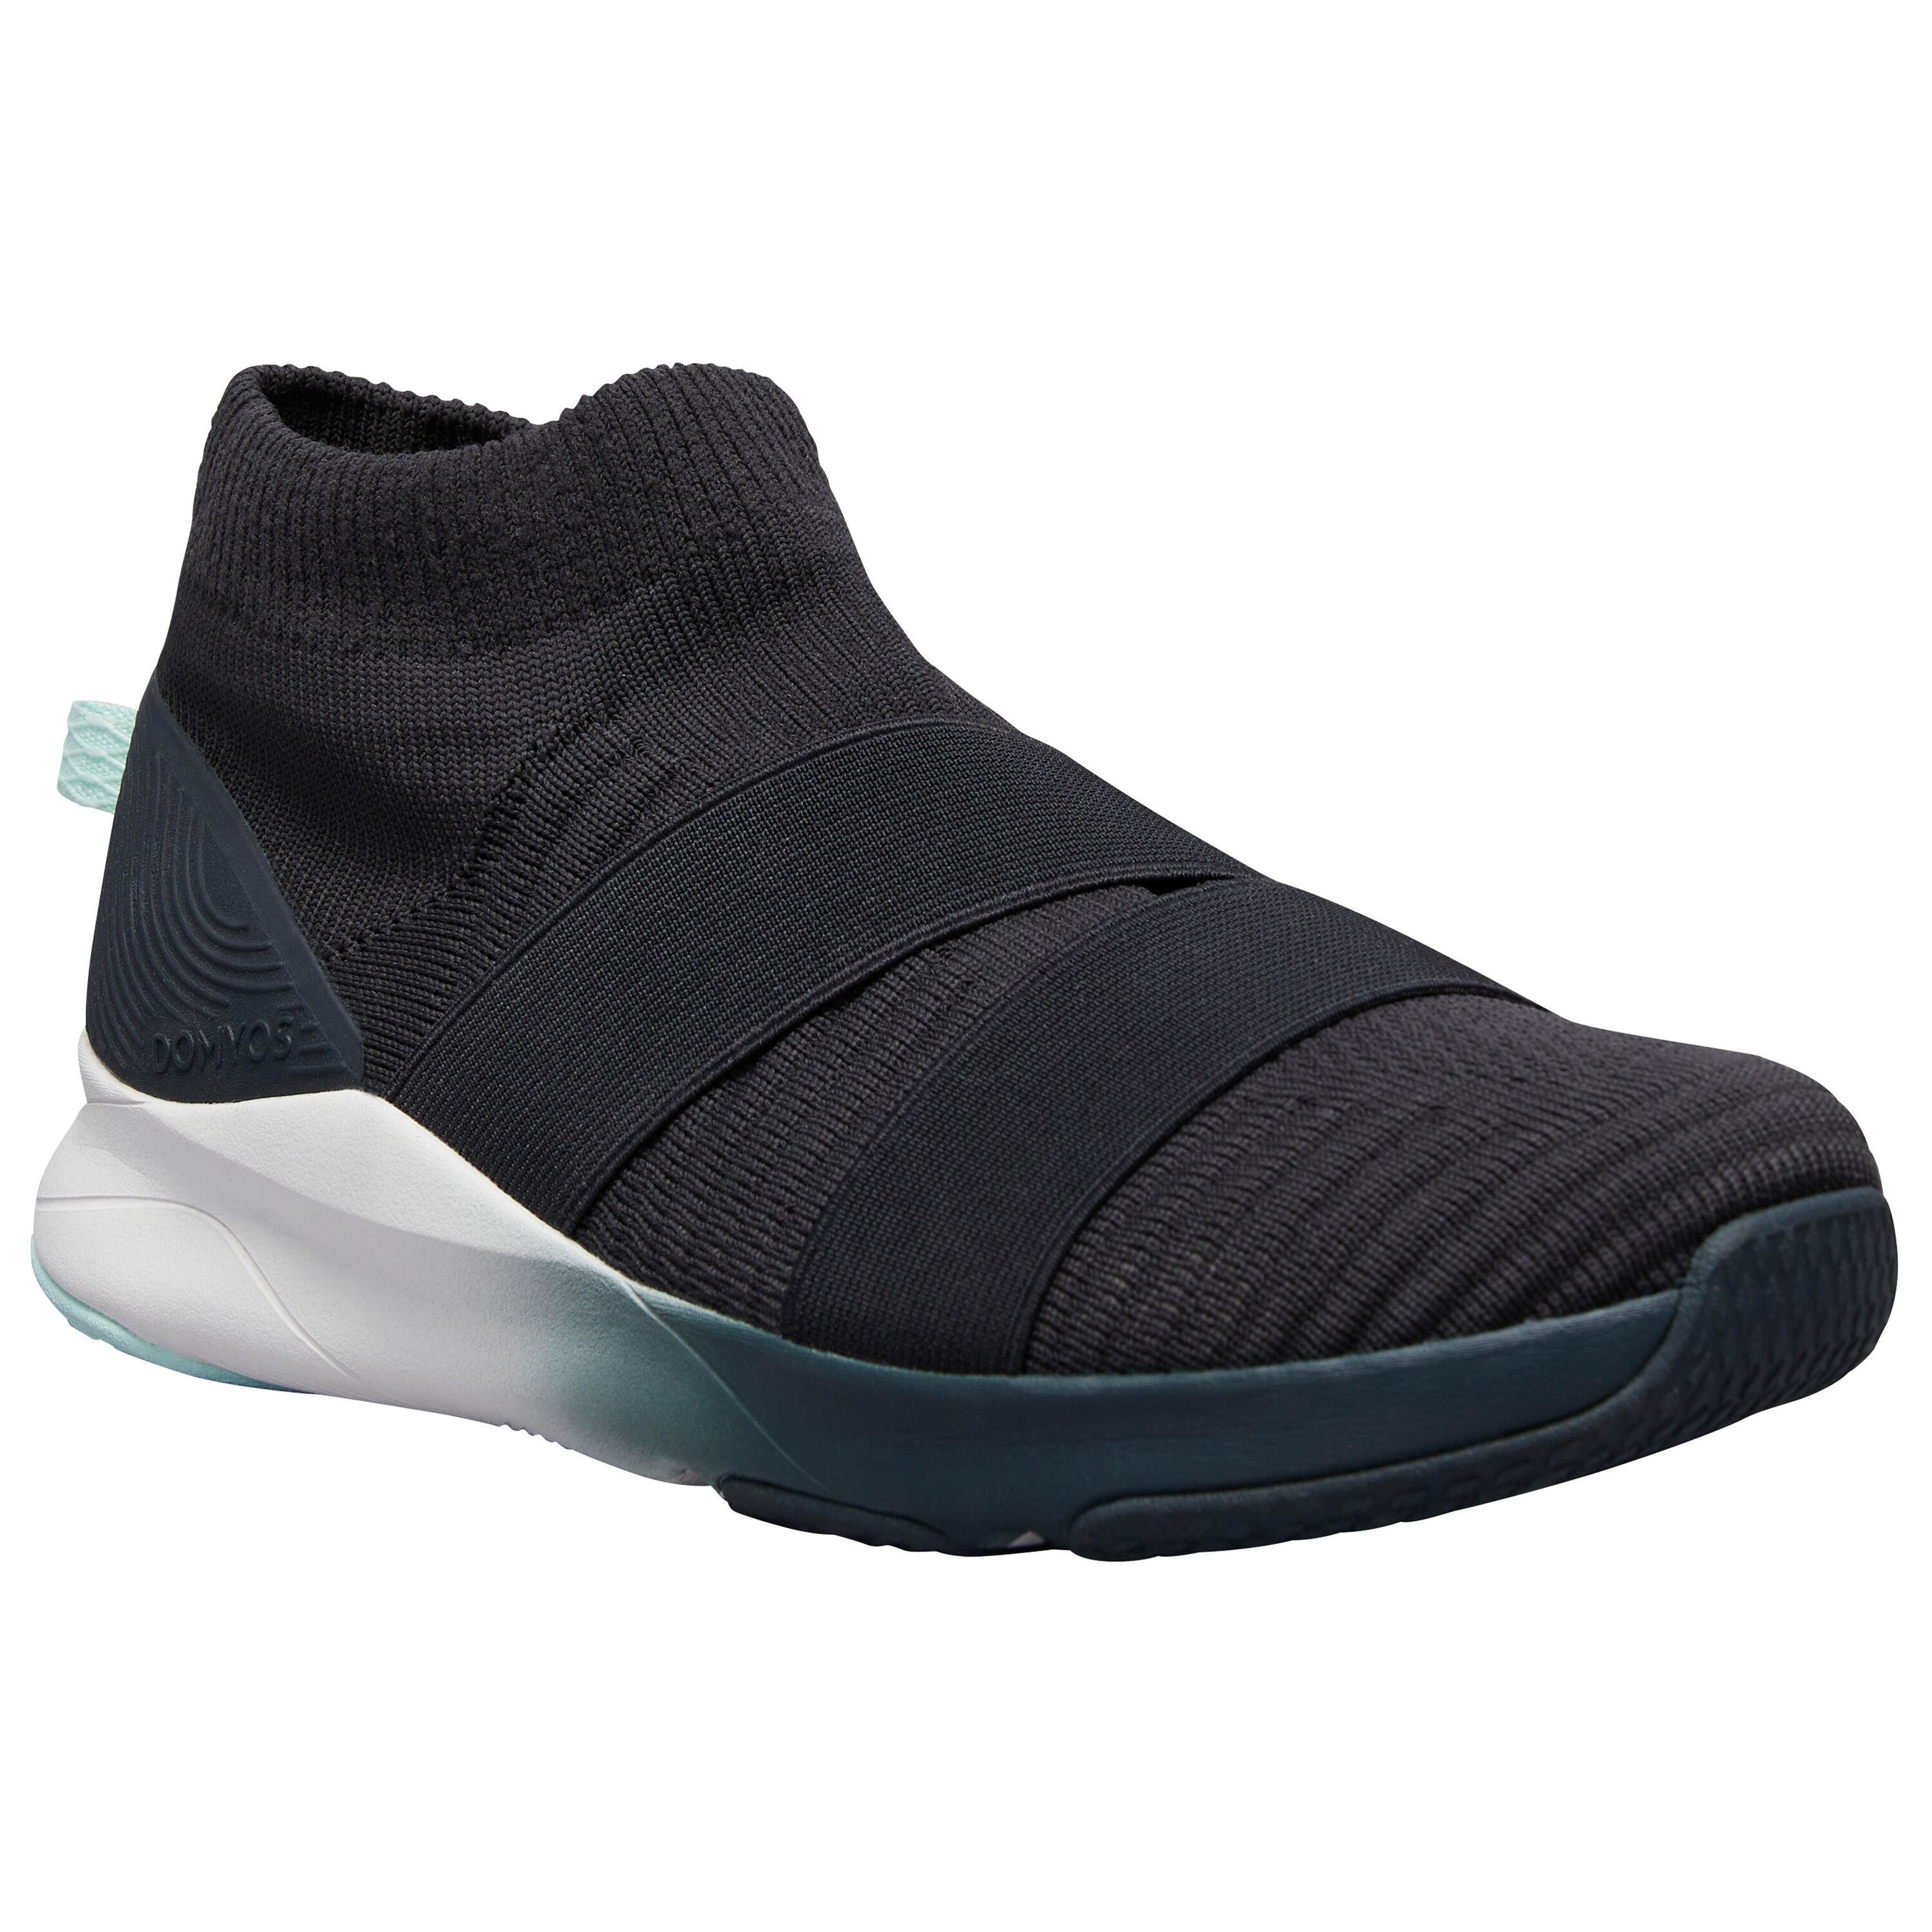 DOMYOS Slip-on Fitness Shoes 500 - Grey